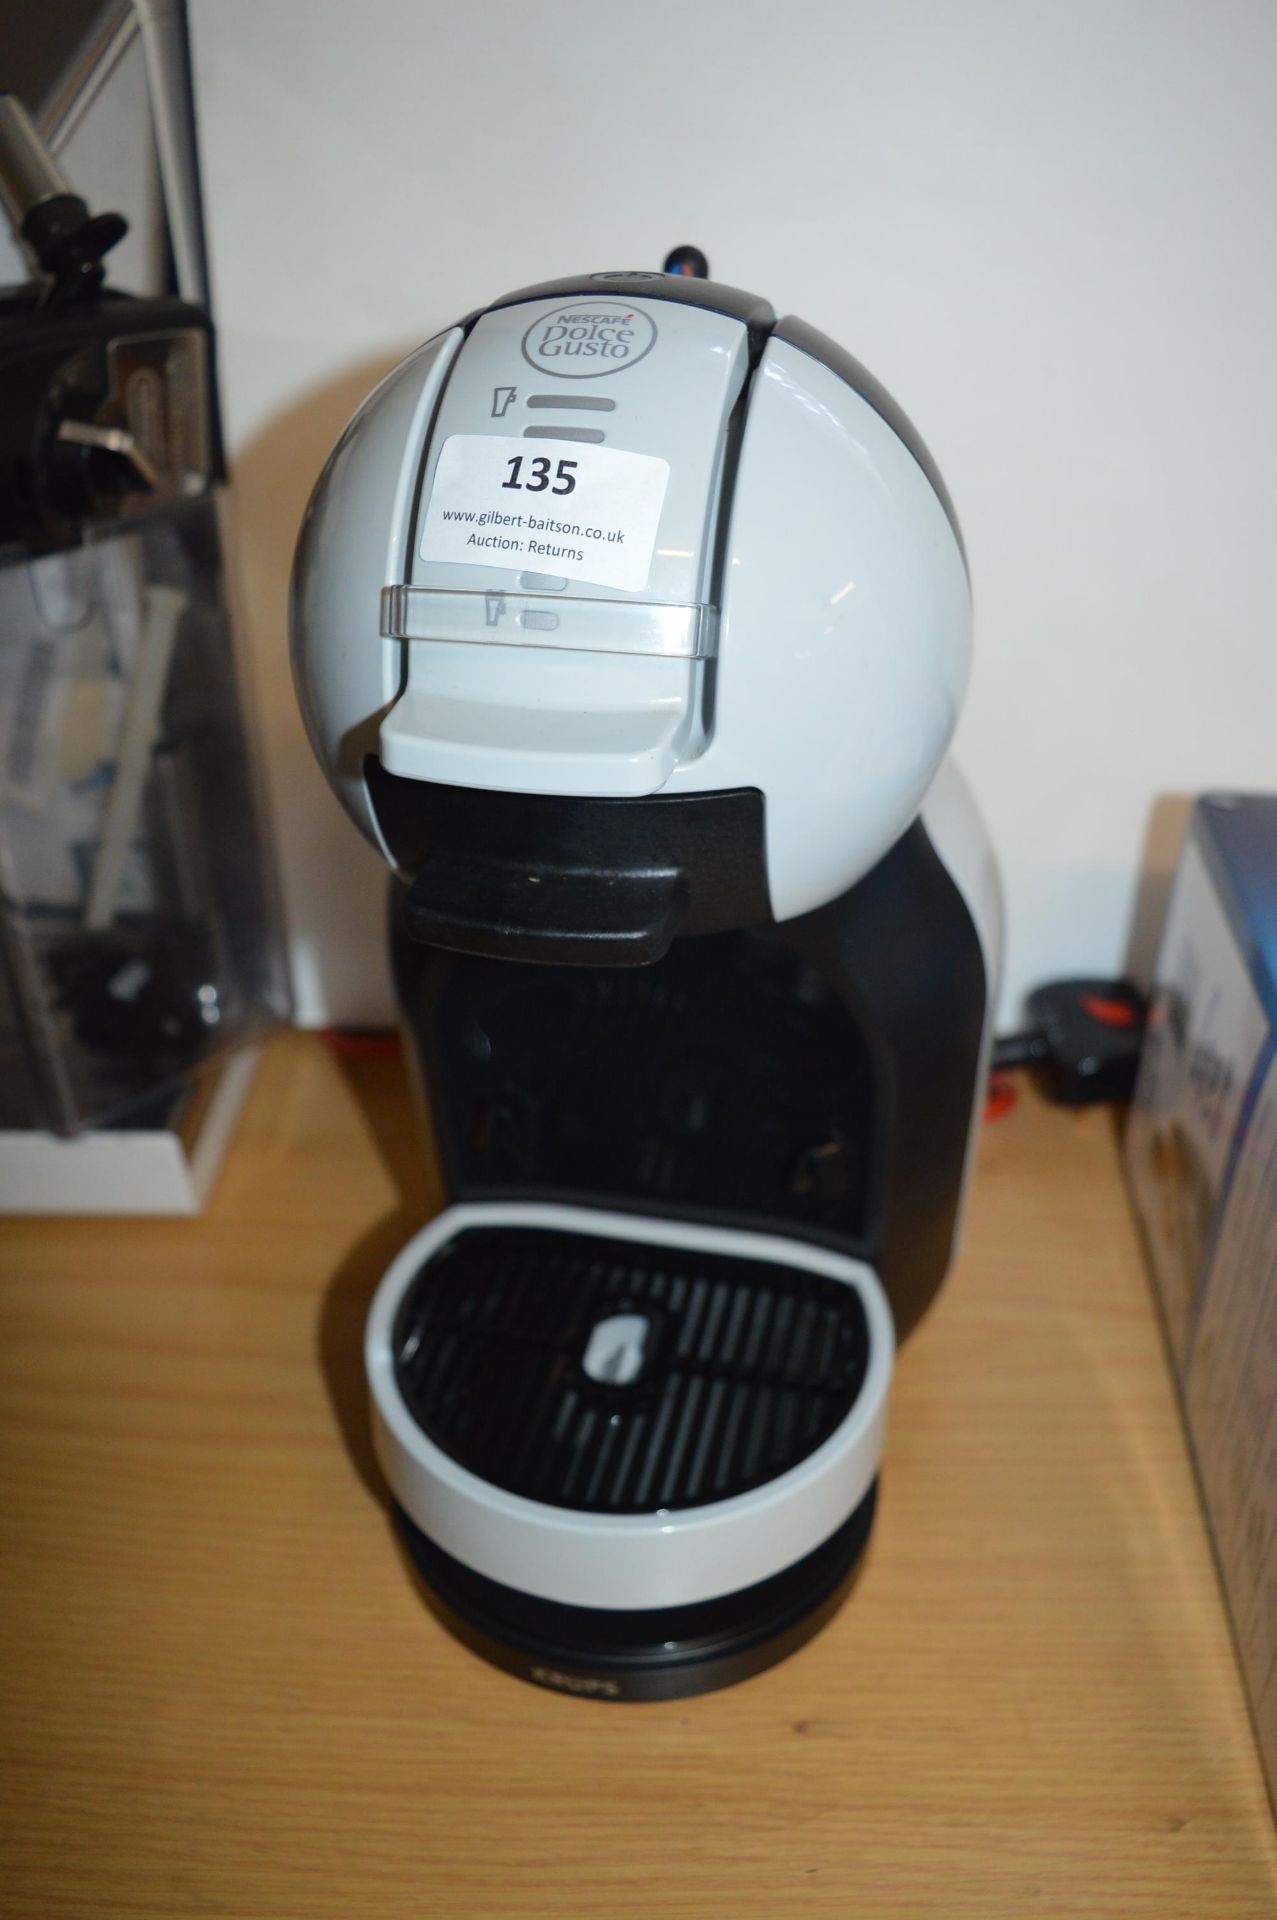 *Nescafe Dolce Gusto Coffee Machine